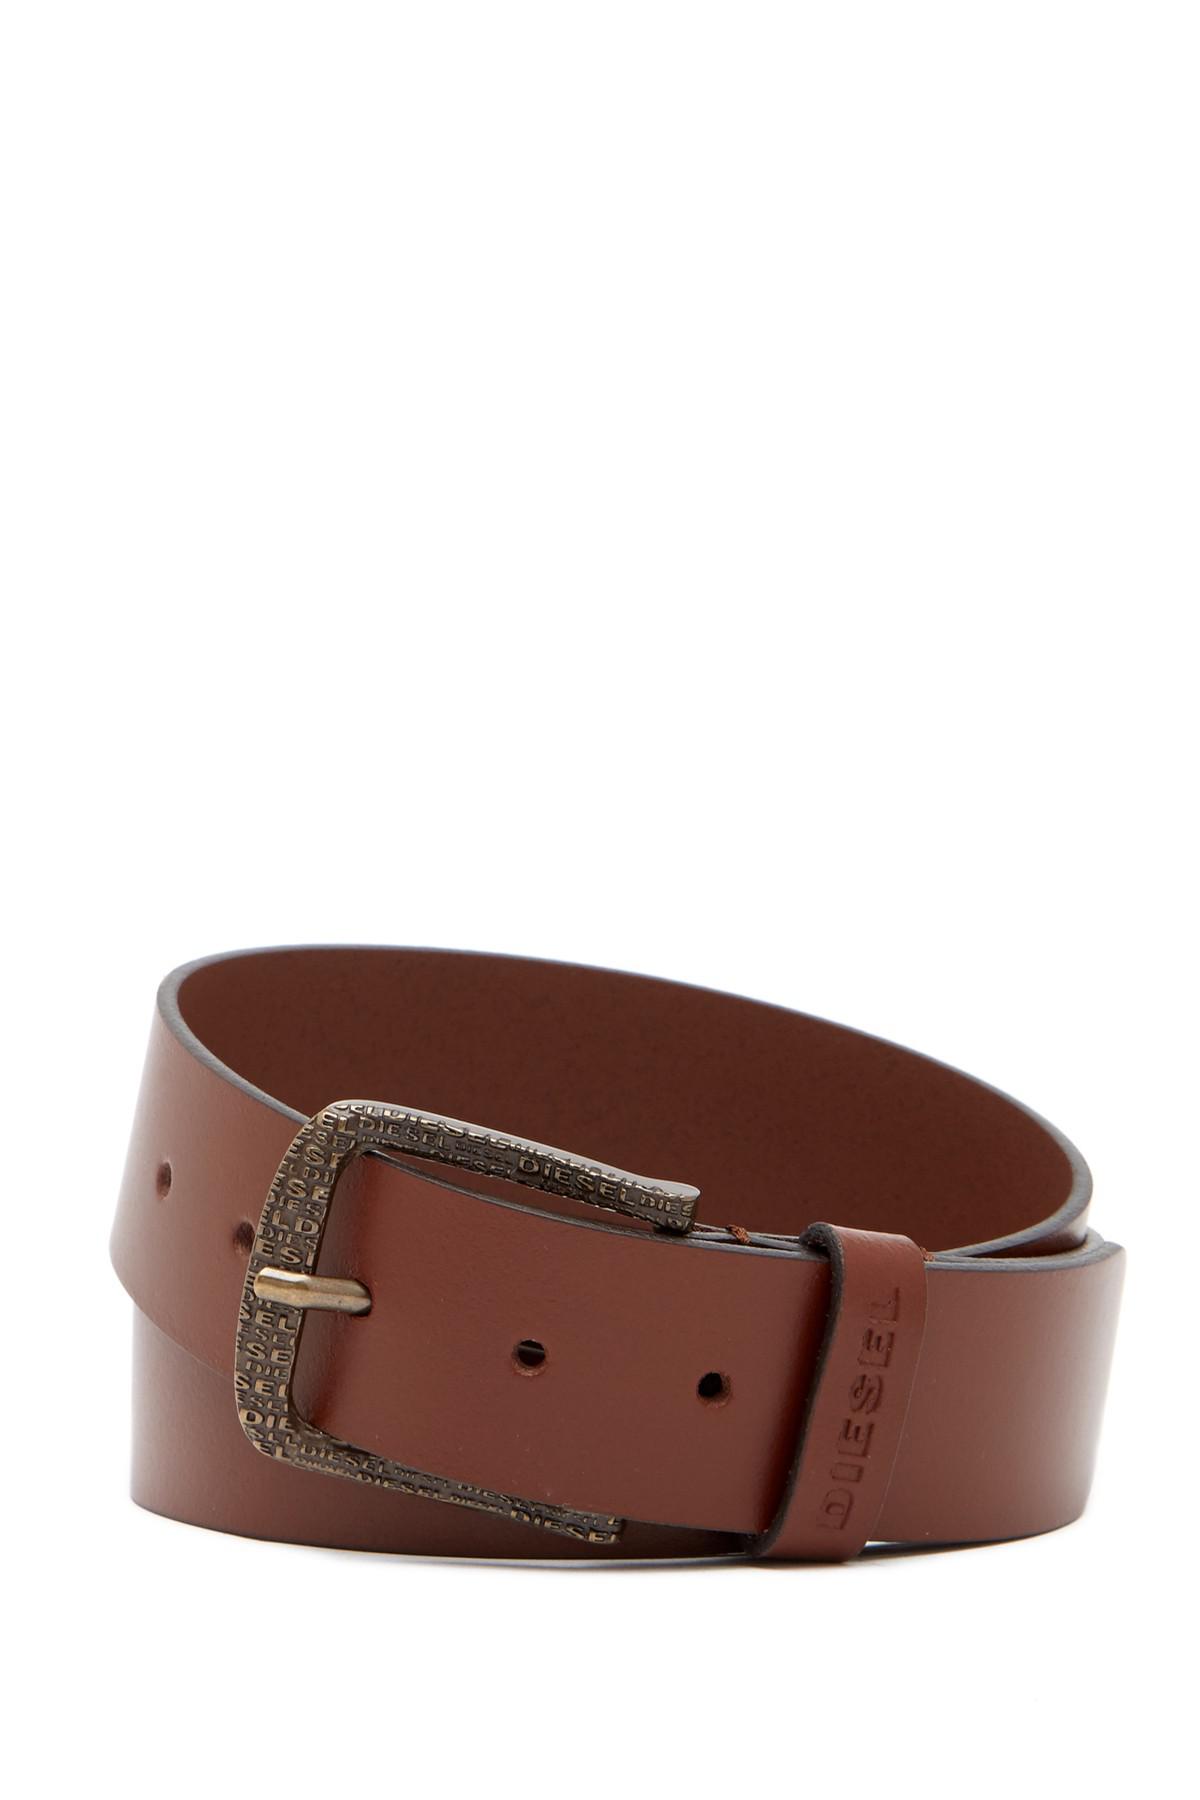 DIESEL Leather Belt in Vintage/wa (Brown) for Men - Lyst